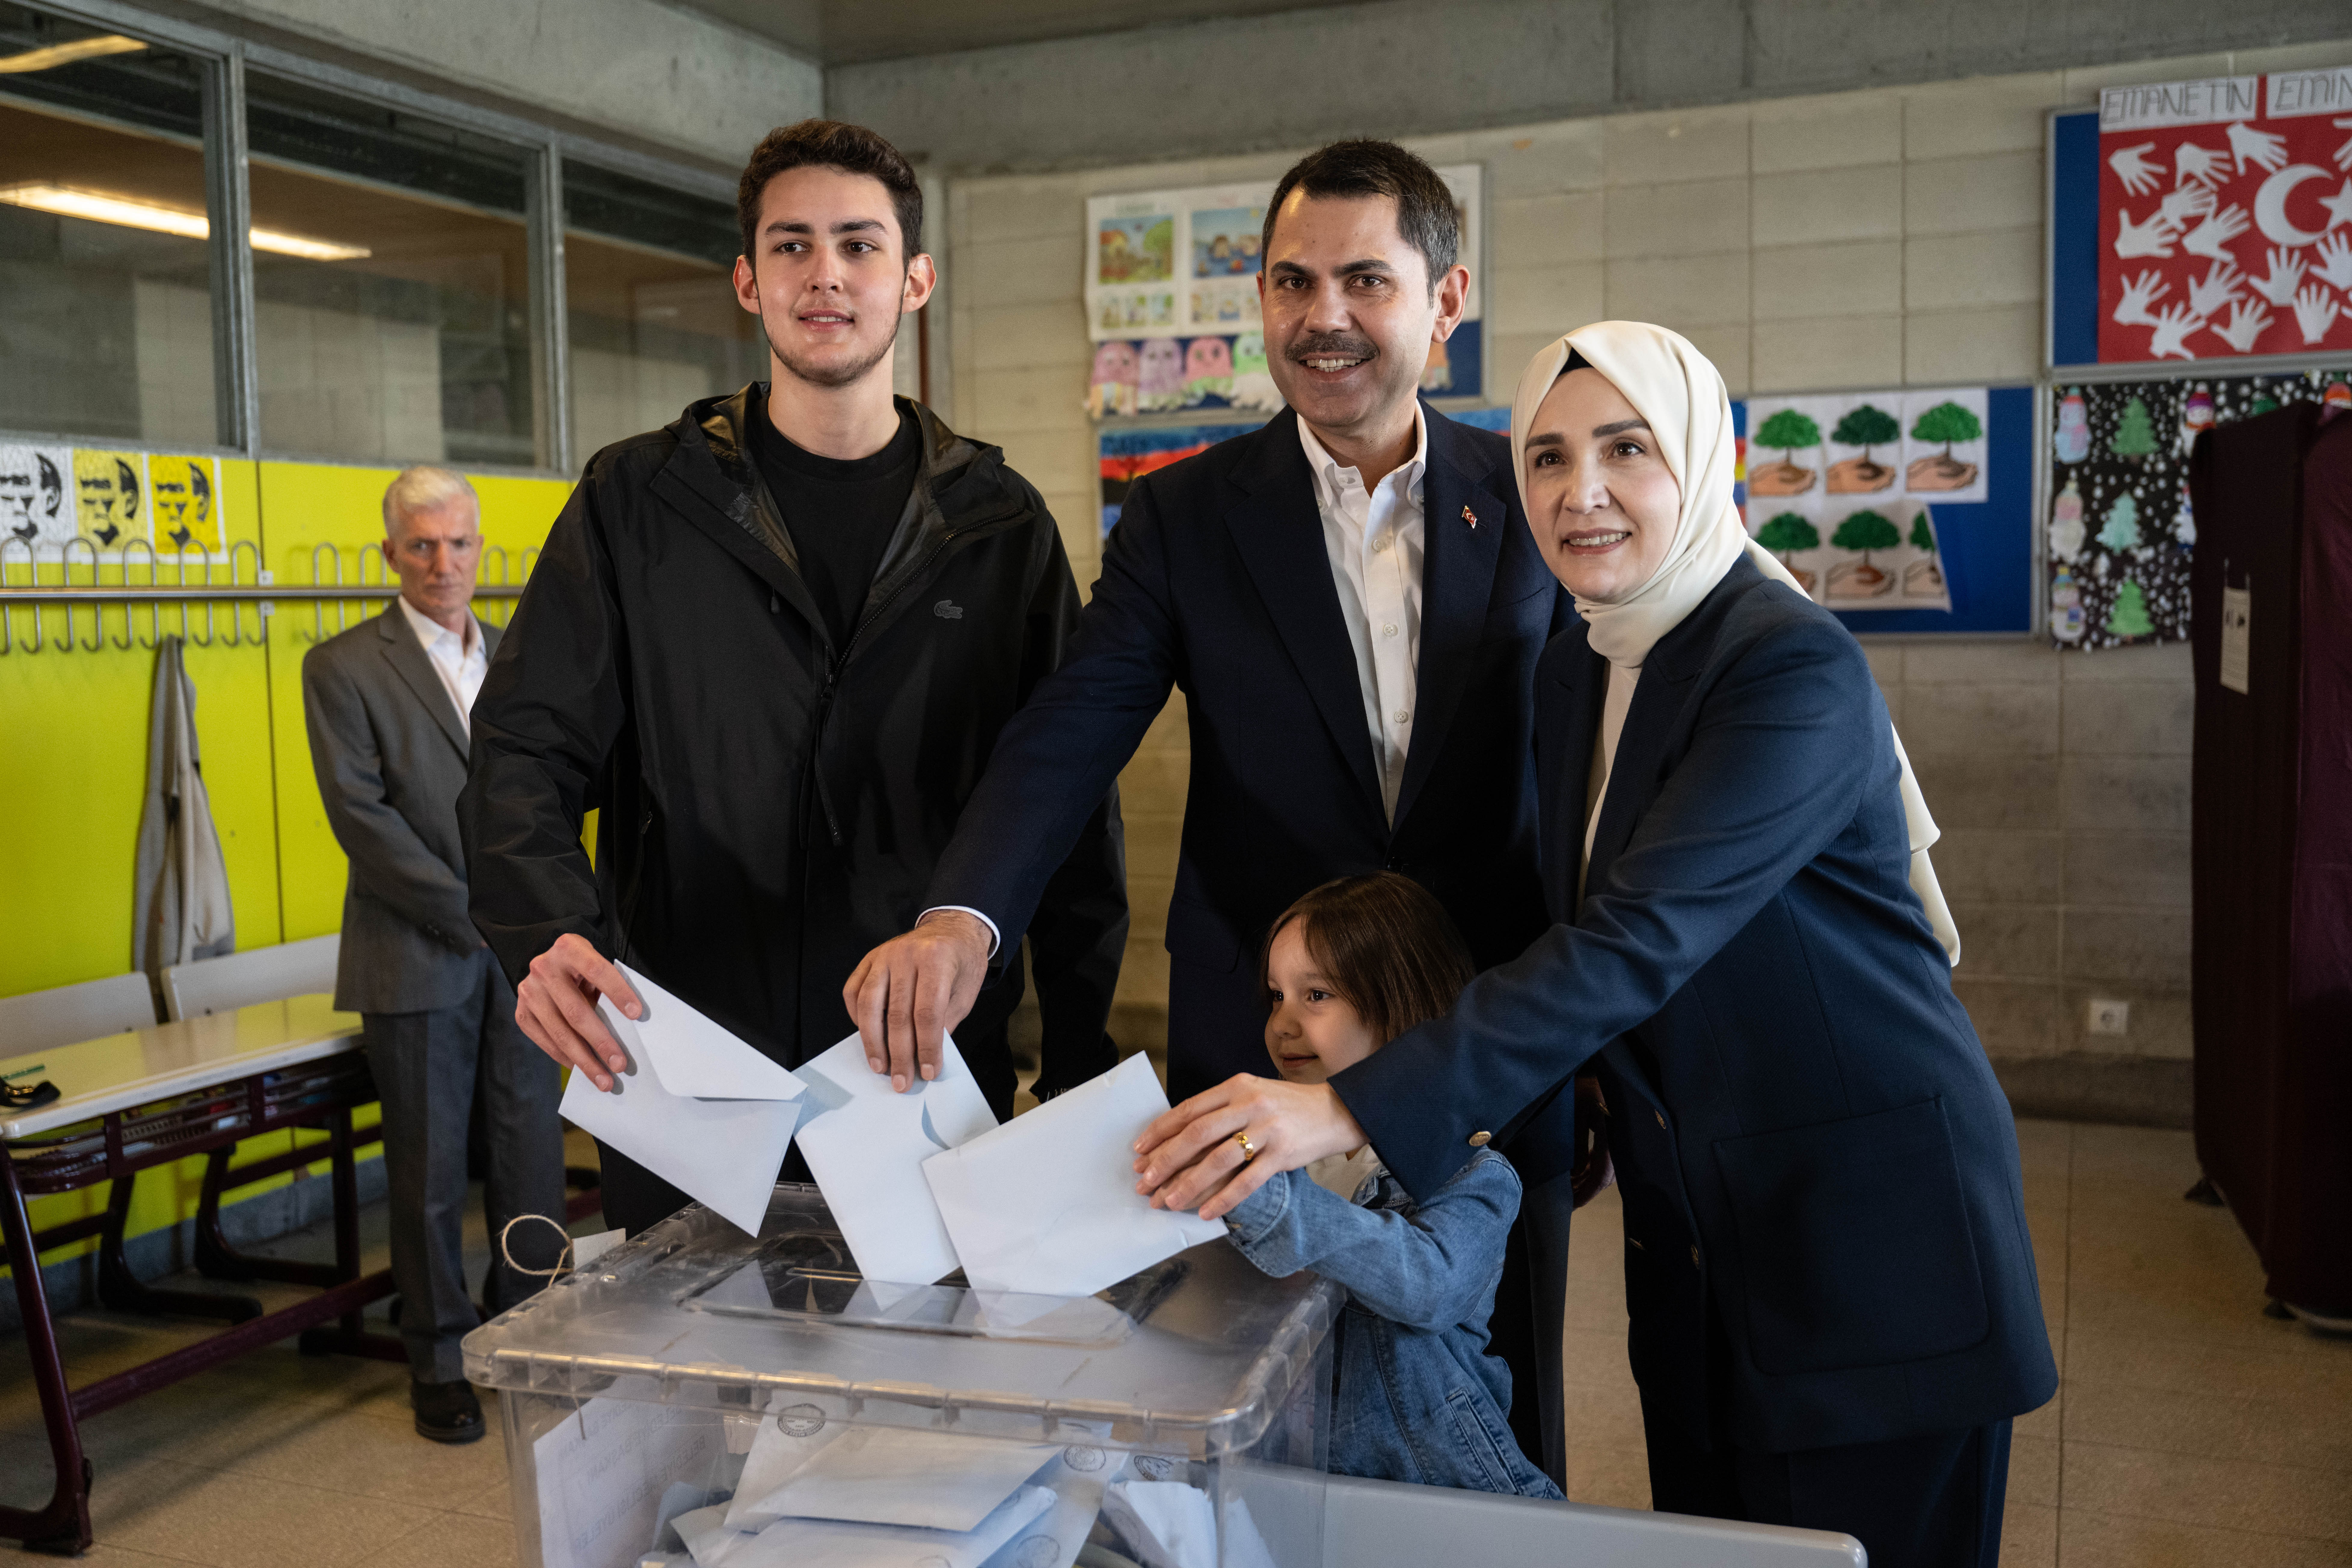 aa-20240331-34142632-34142630-istanbul-municipality-mayor-candidate-of-the-peoples-alliance-murat-kurum-casts-his-ballot-in-istanbul.jpg